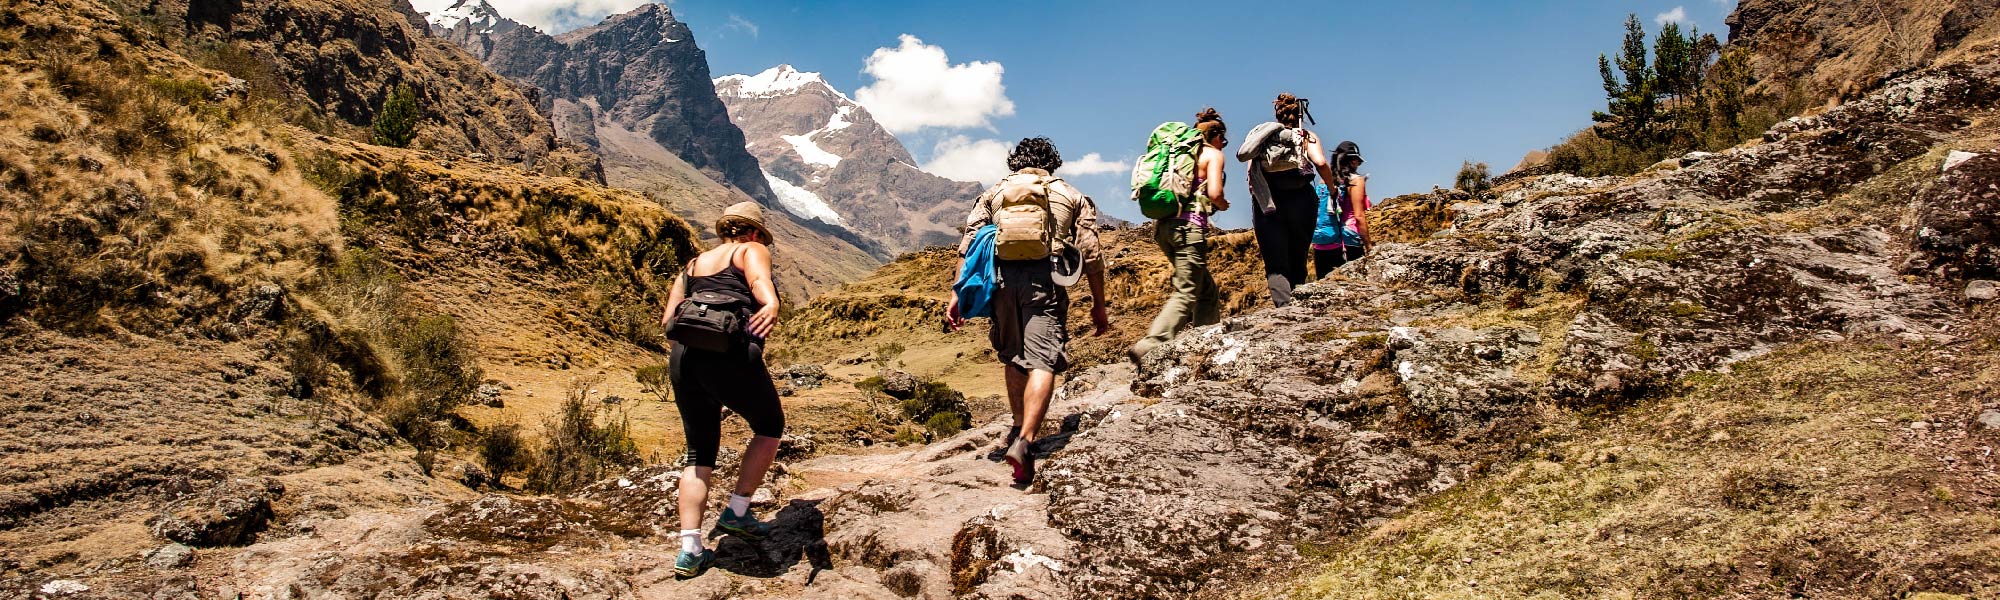 Caminatas alternativas a Machu Picchu